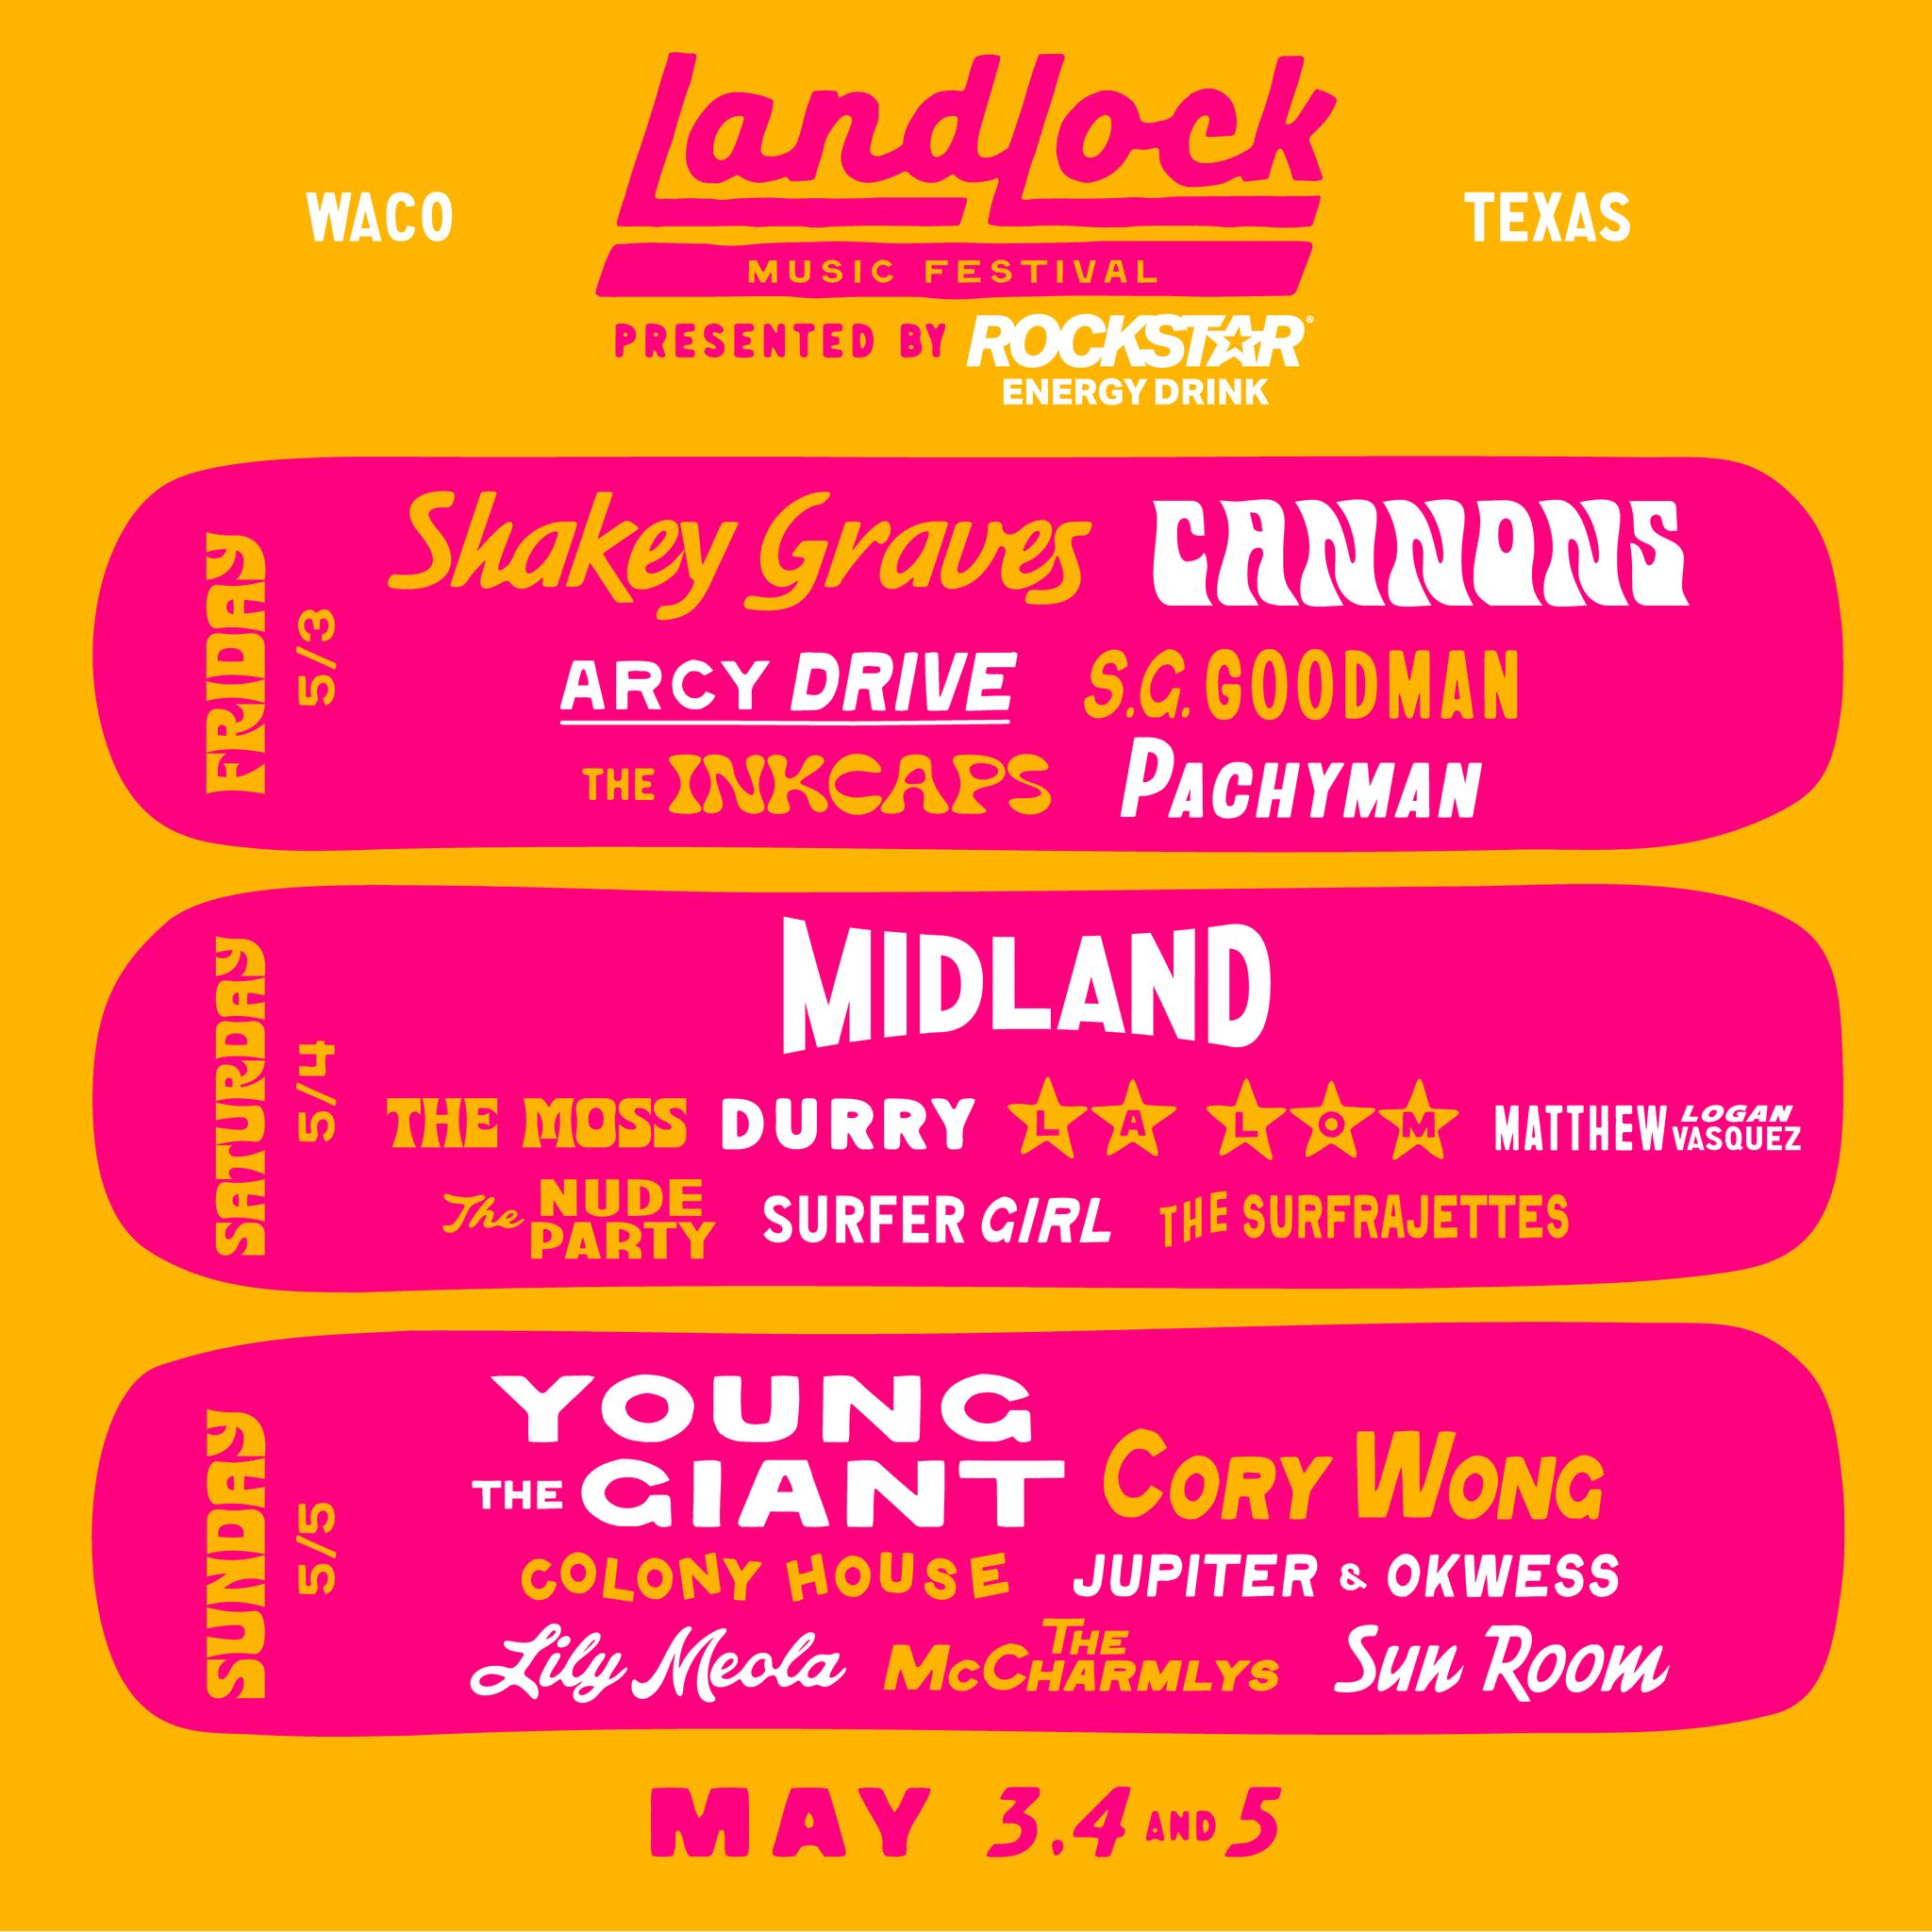 Landlock Festival lineup poster